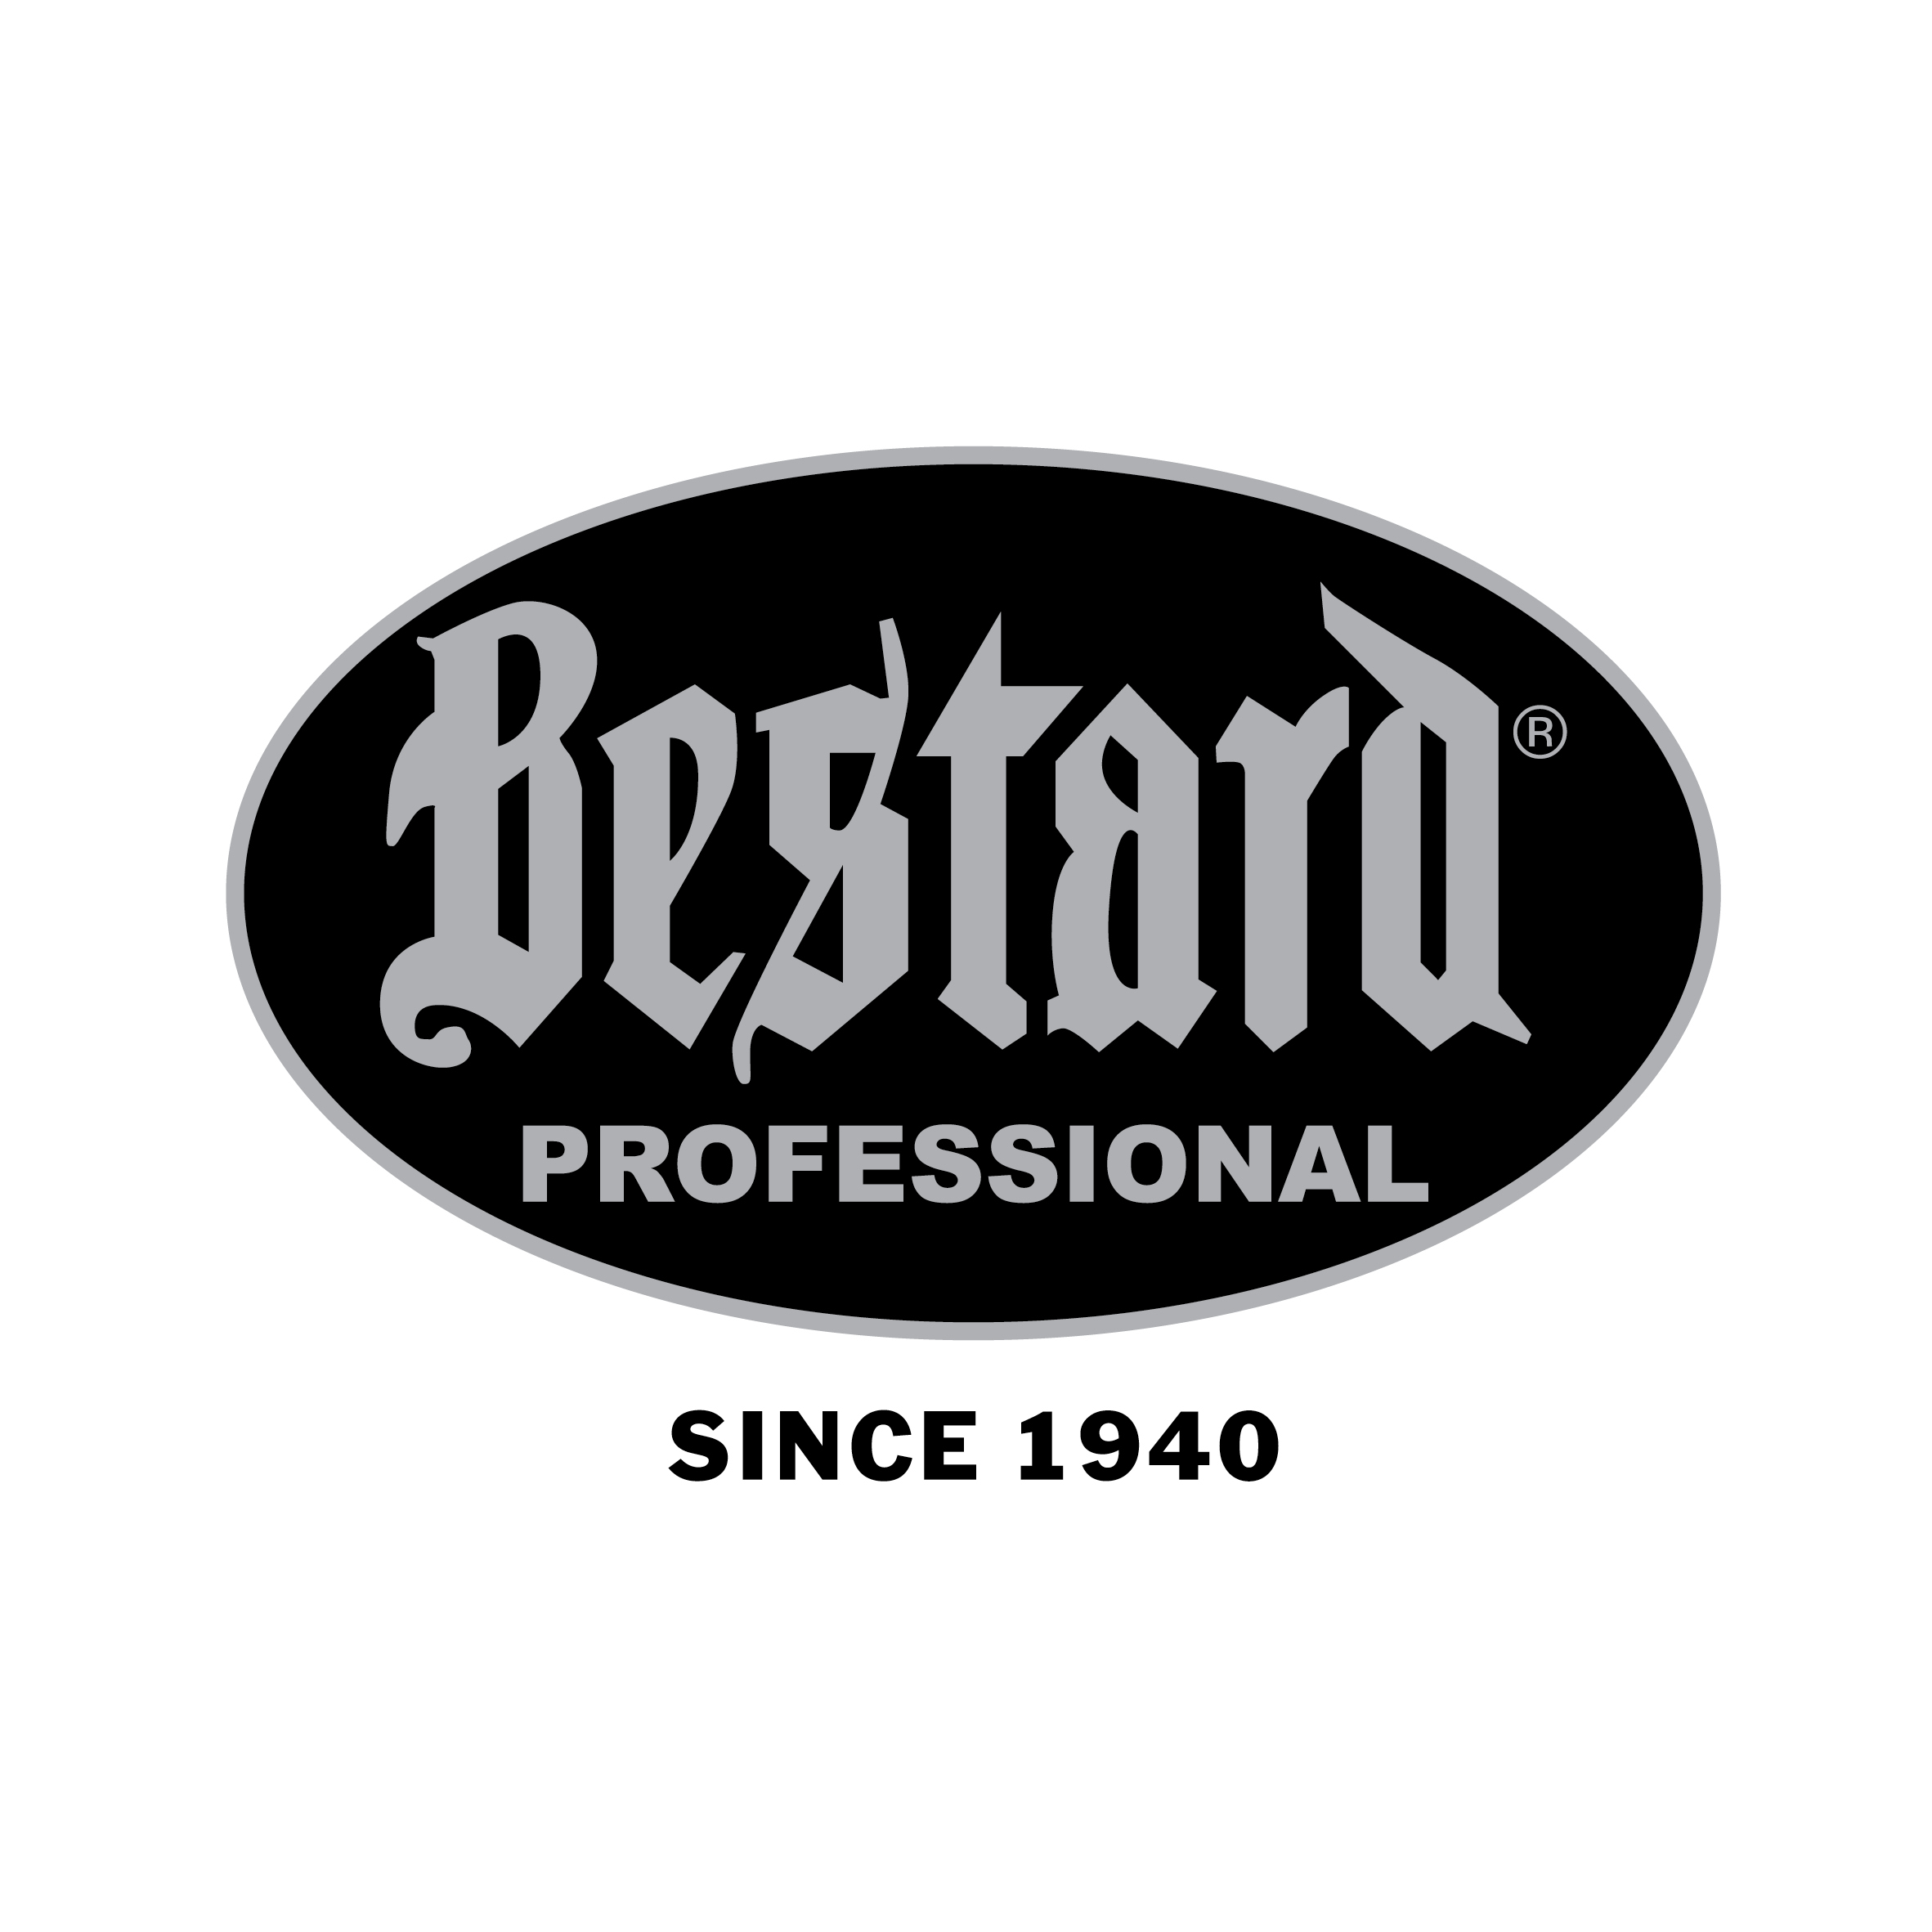 Bestard Professional.jpg